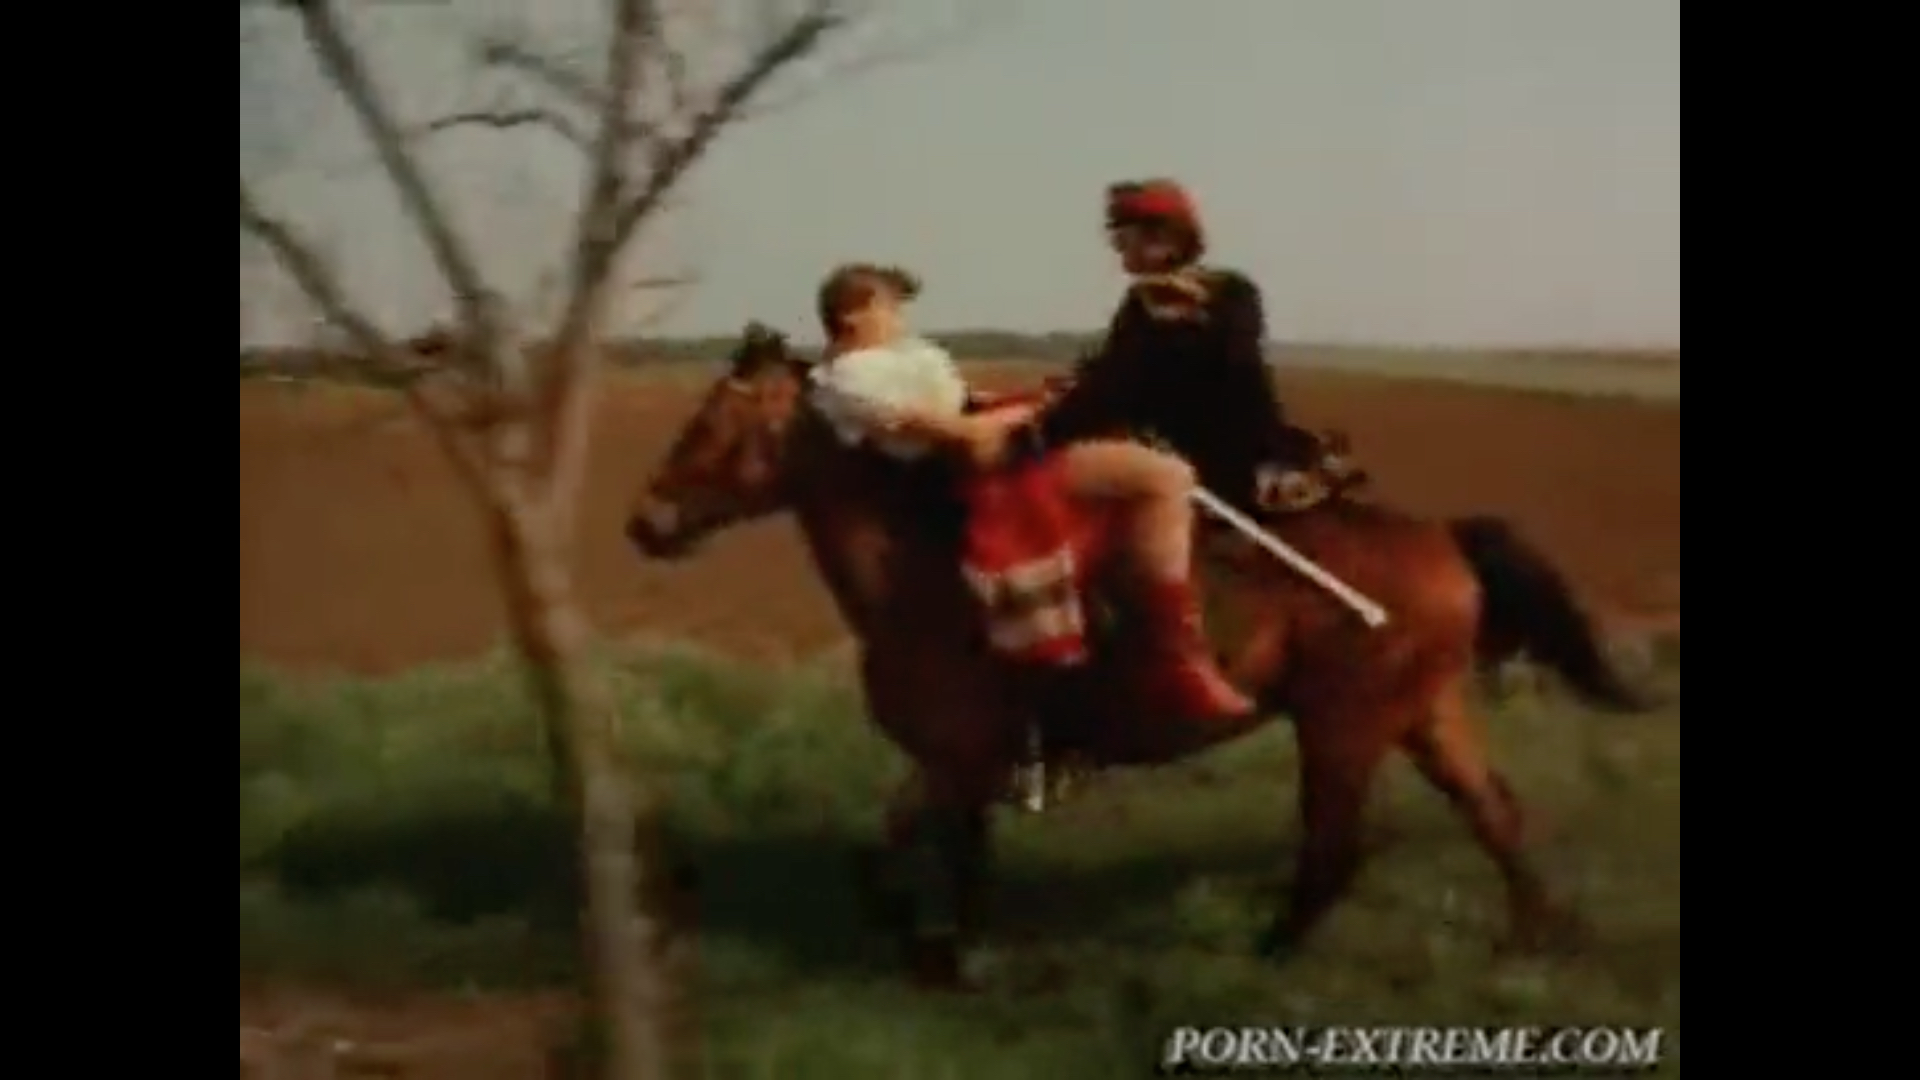 Xxx Hpre - Sex on a running horse! - ThisVid.com